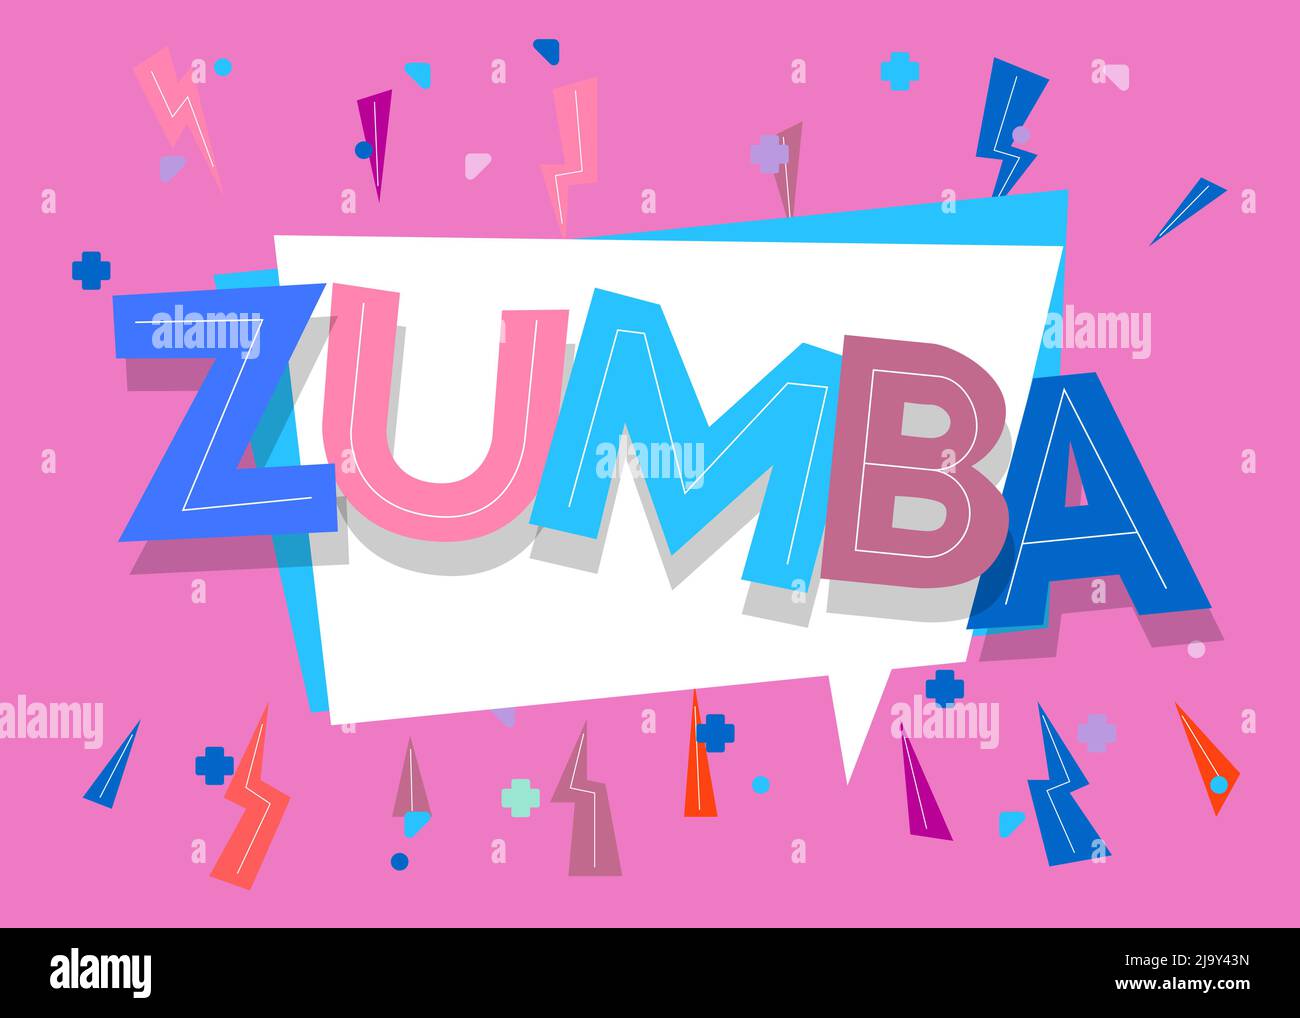 Zumba dance Immagini Vettoriali Stock - Alamy